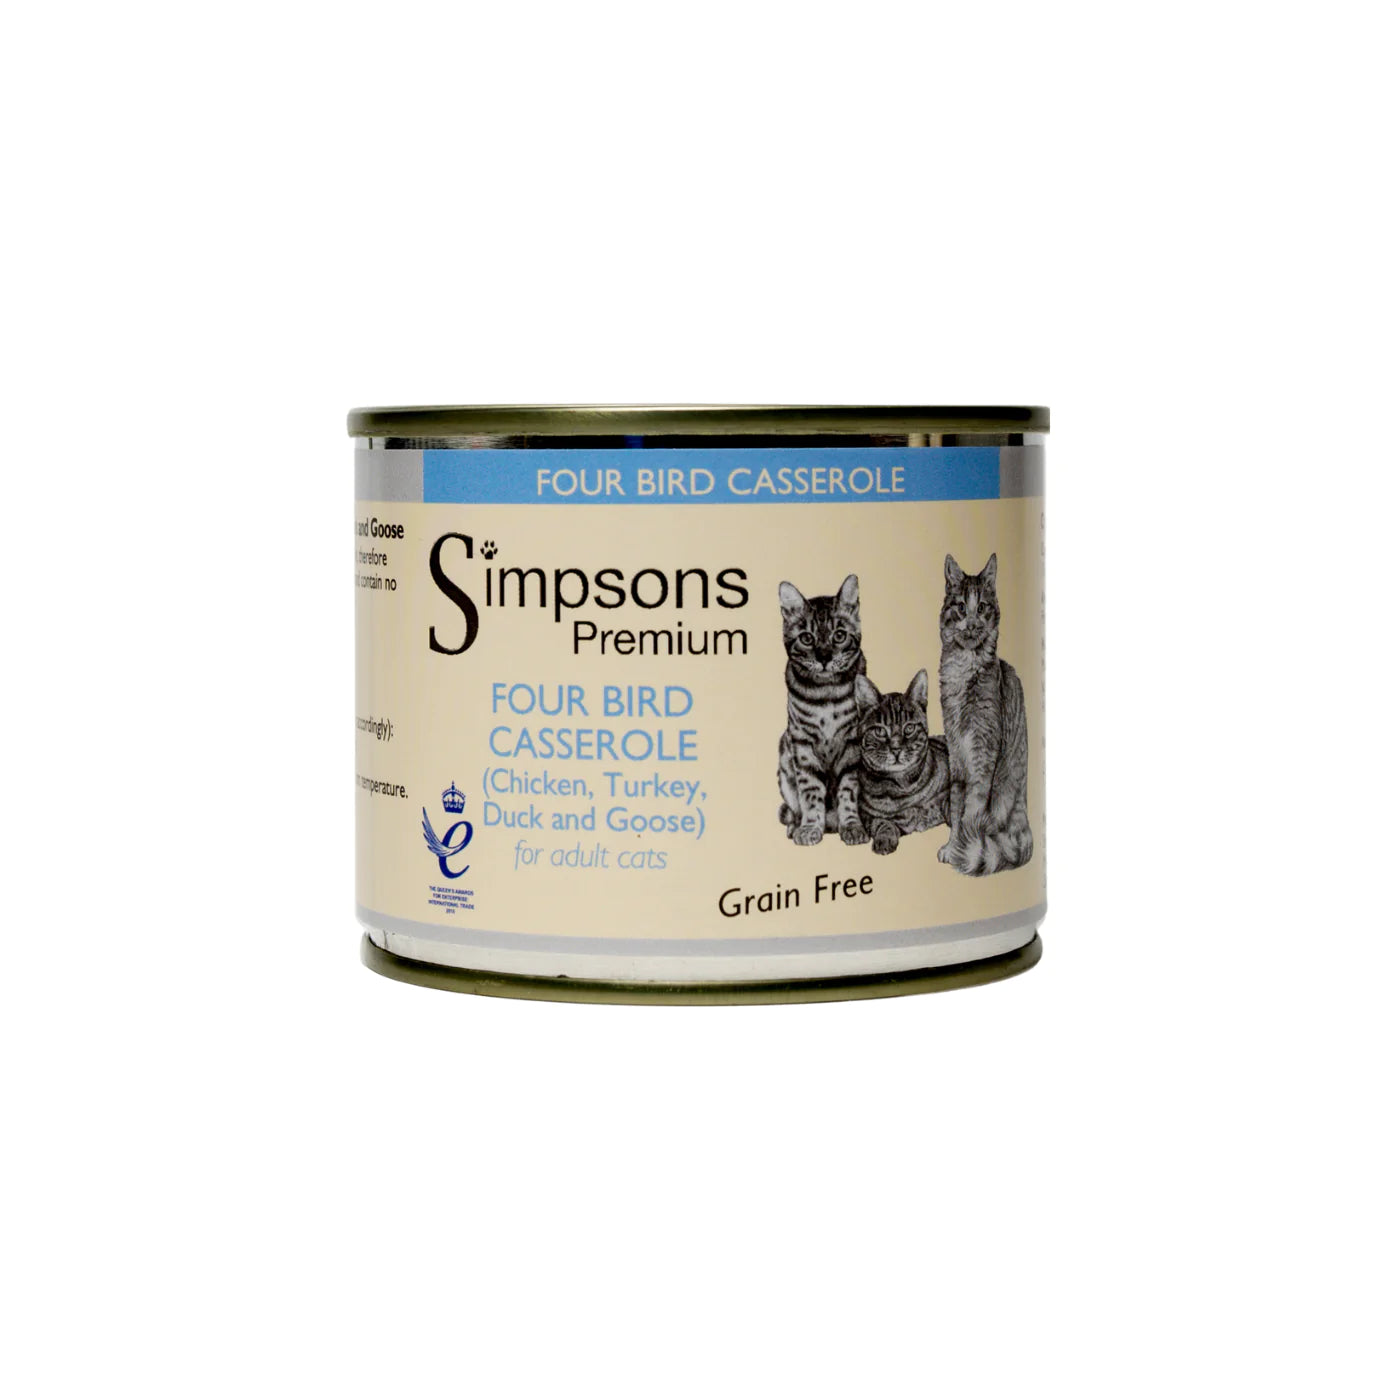 Simpsons Cat Food - Four Bird Casserole (200g)